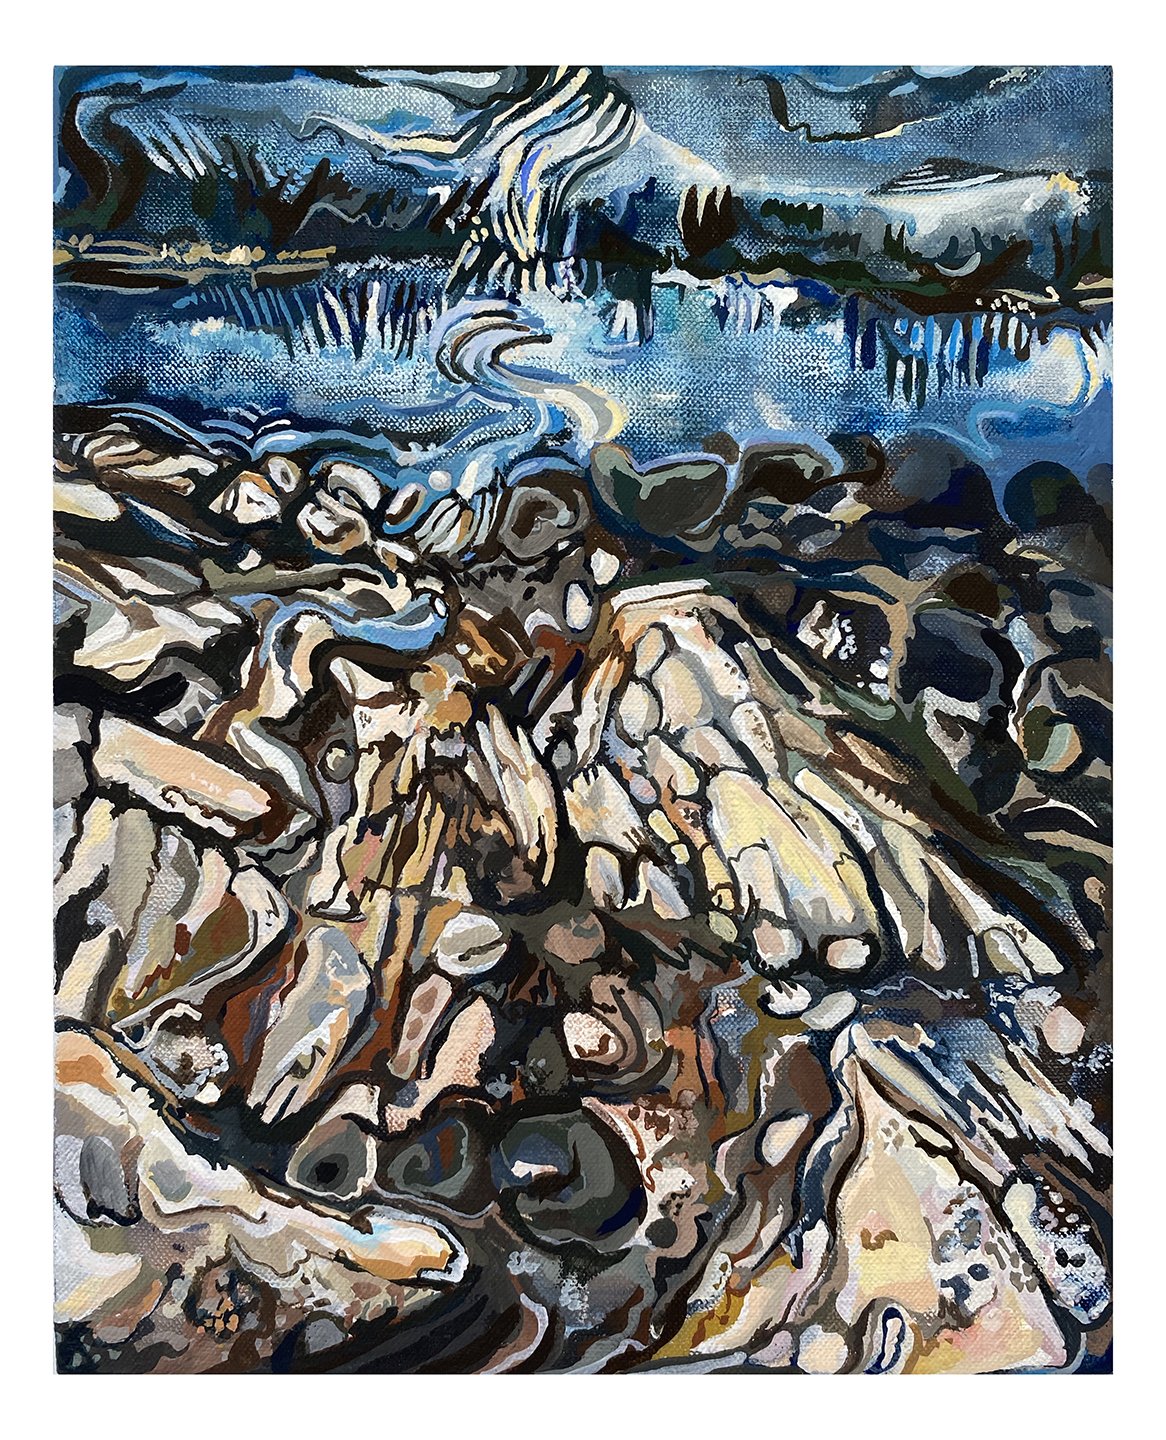  Maria Calandra, Foot Rock at Barred Island, 2021, acrylic on canvas over panel, 10 x 8 inches 